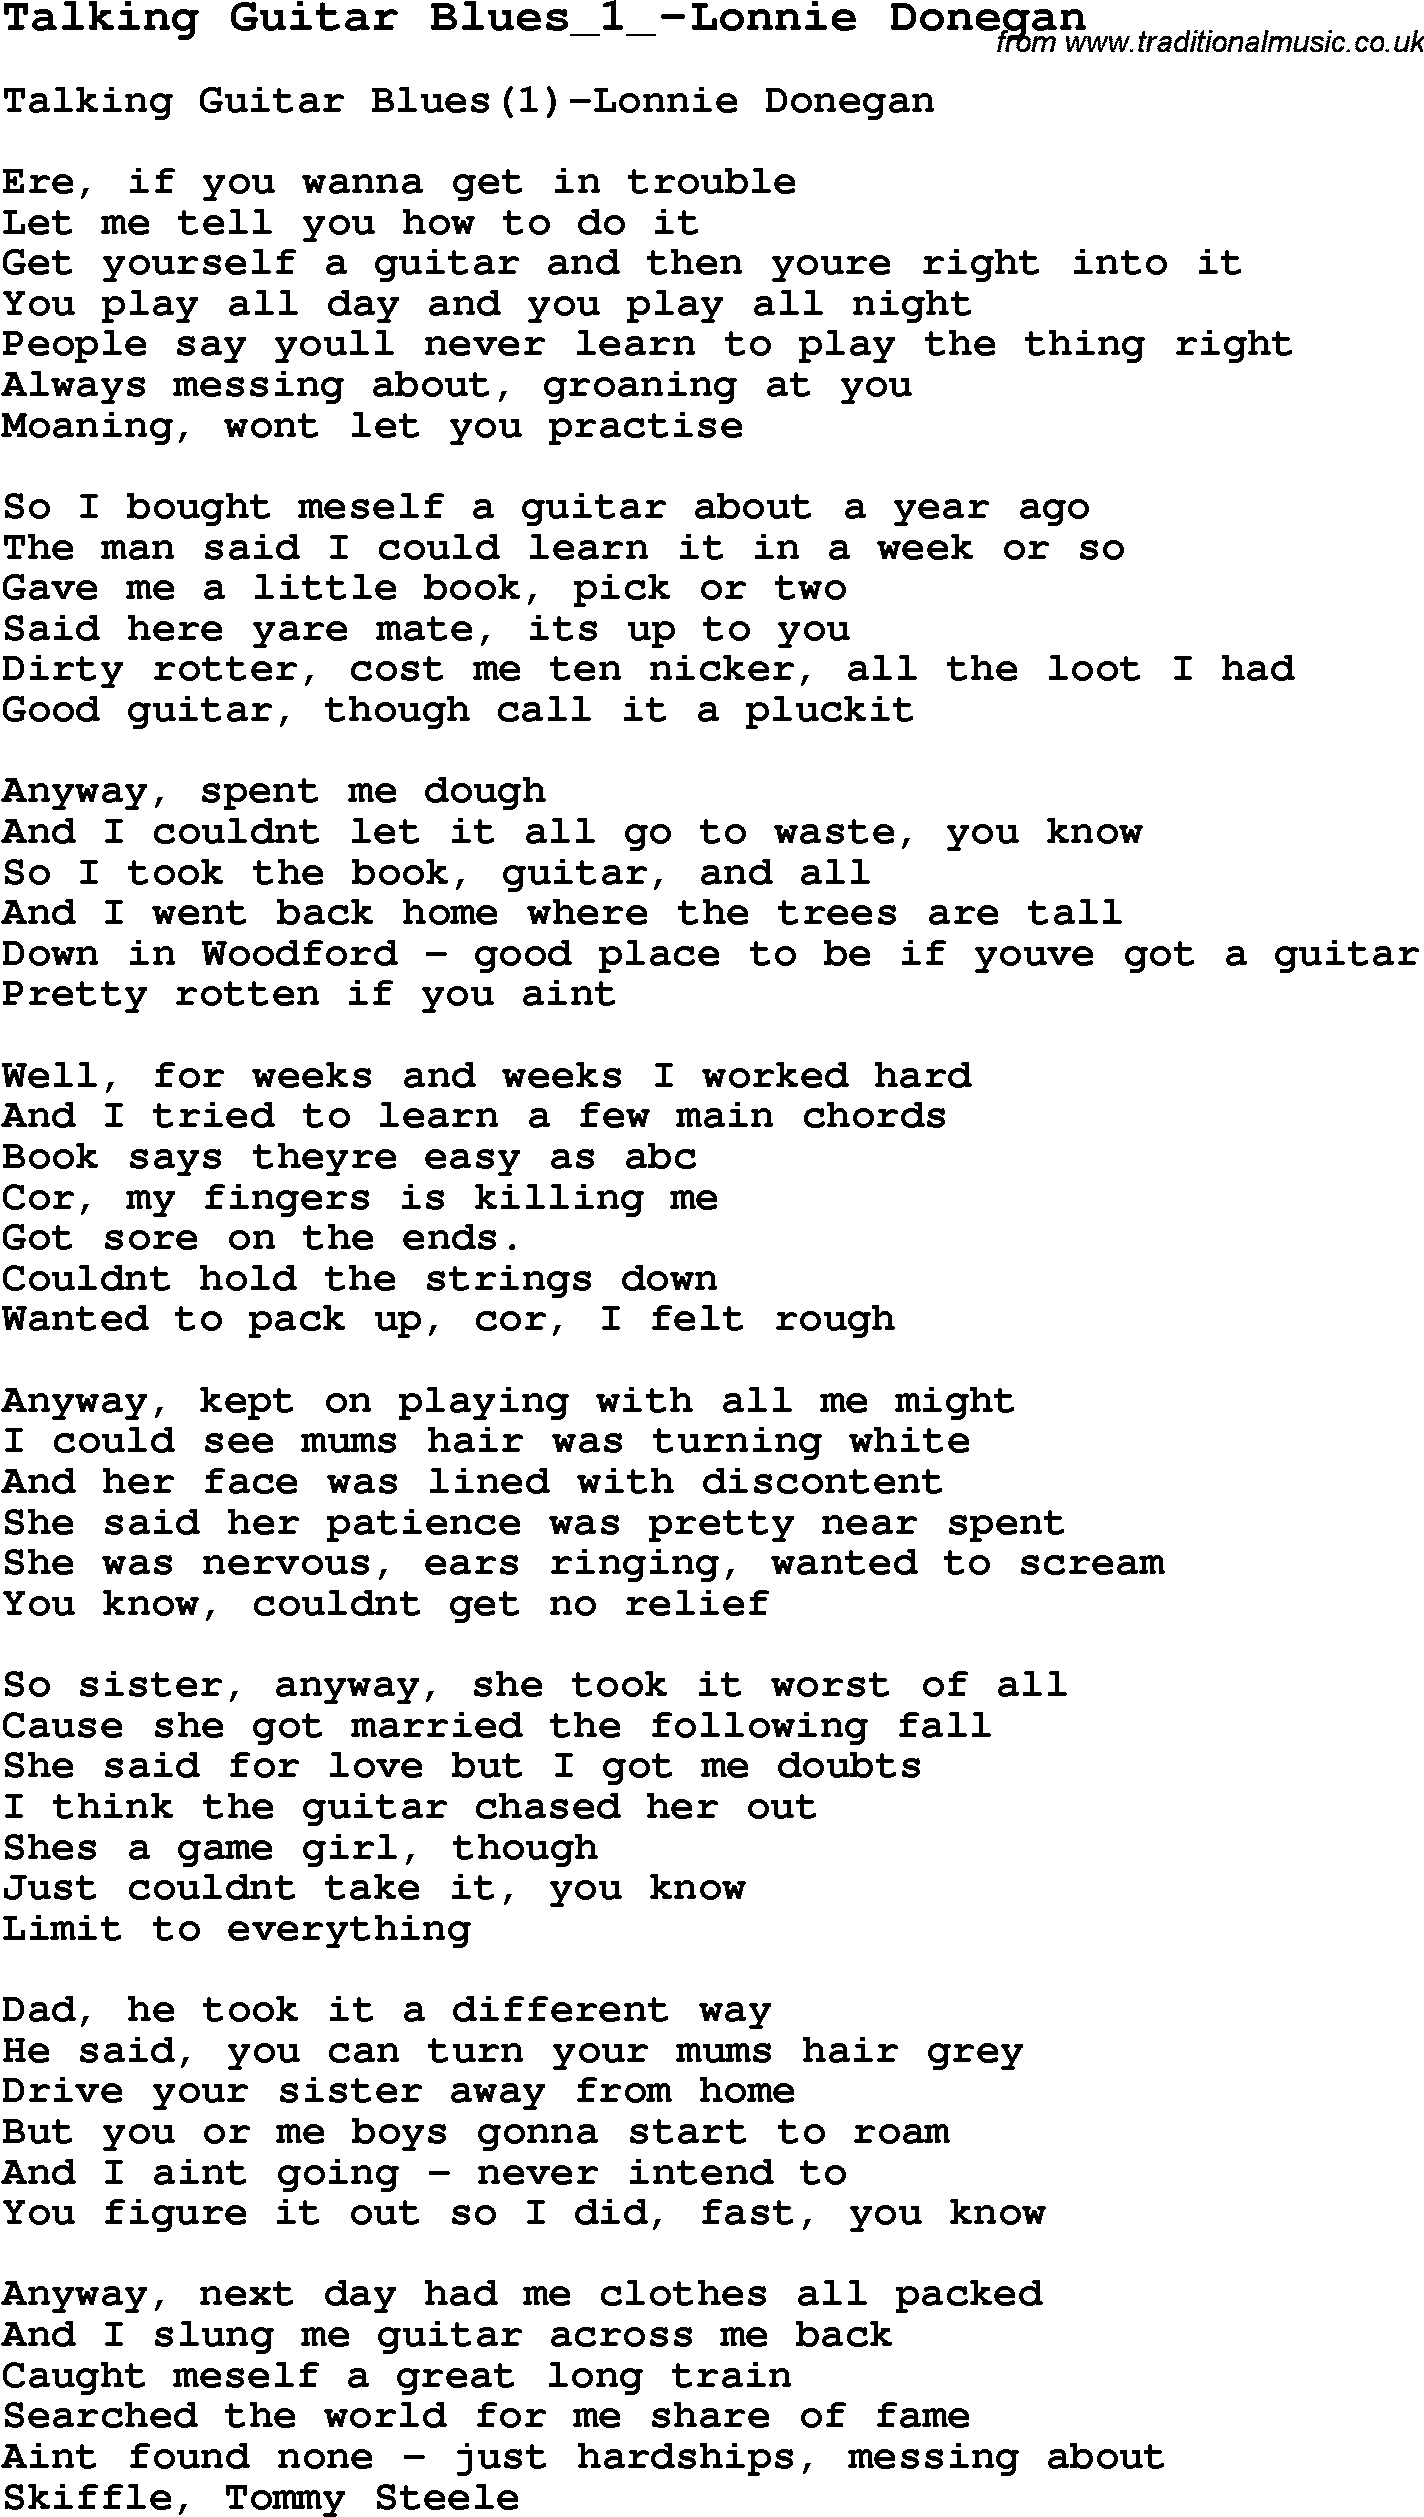 Skiffle Song Lyrics for Talking Guitar Blues 1-Lonnie Donegan.